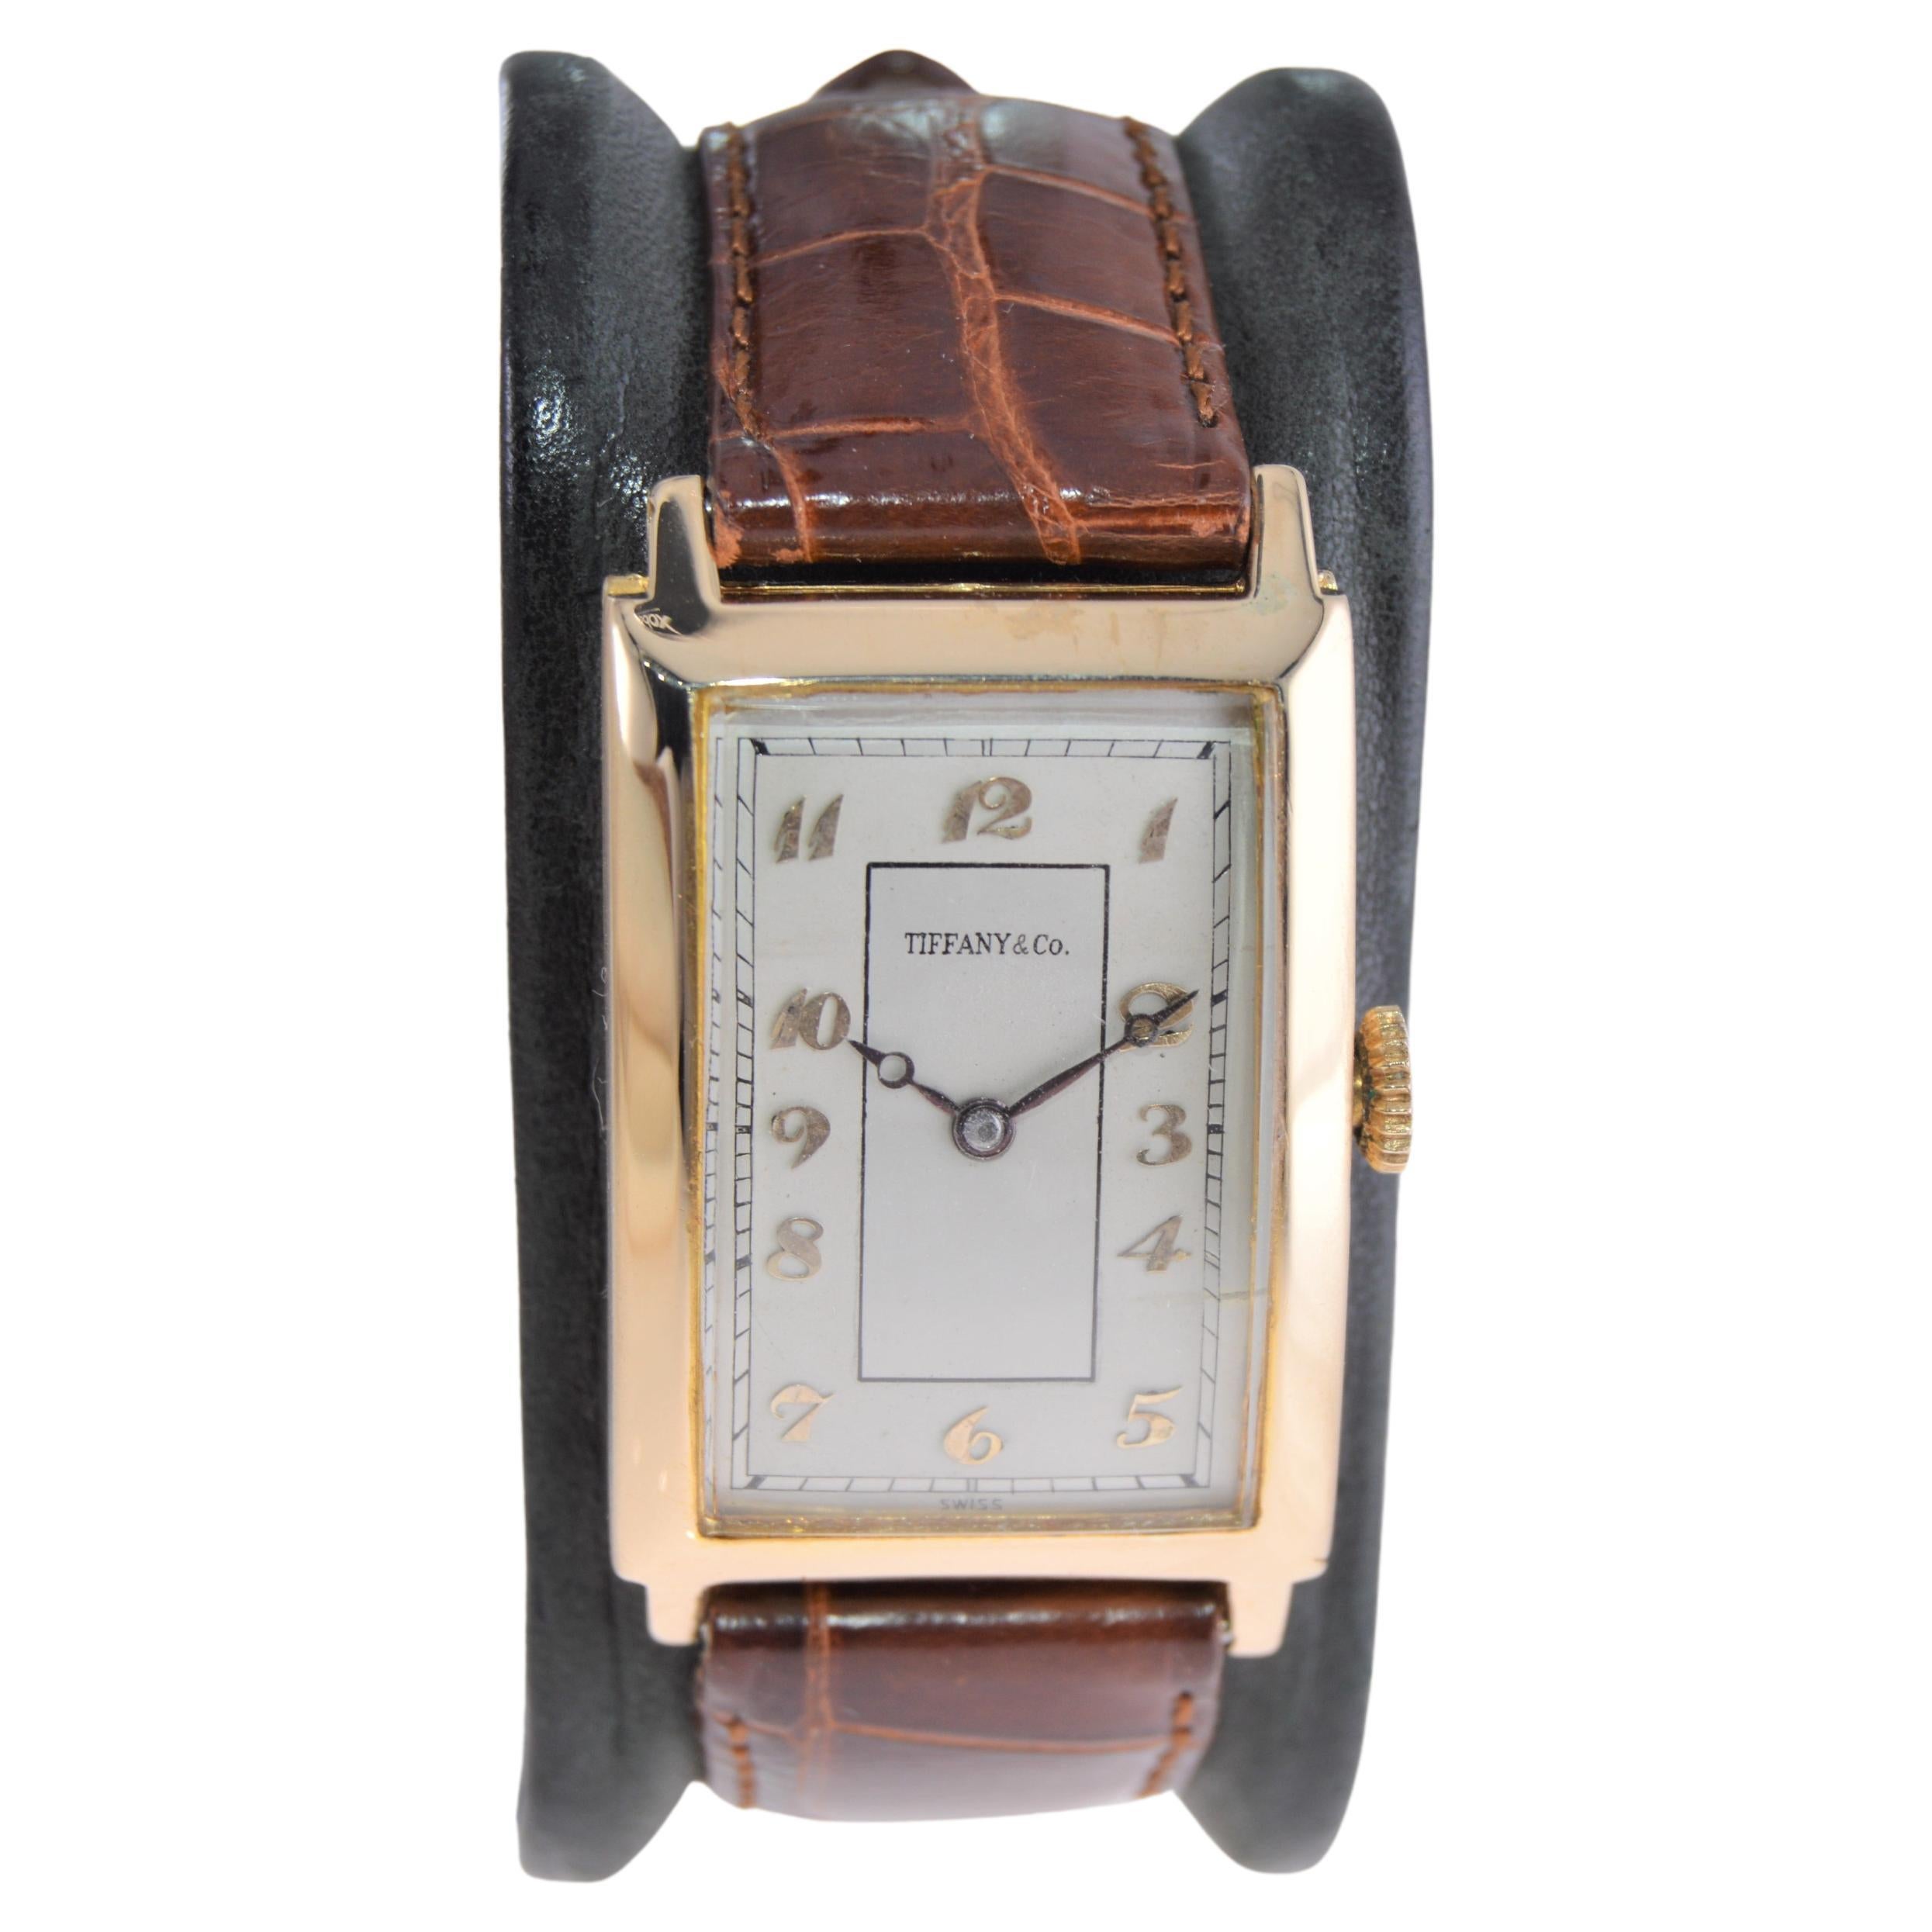 tiffany & co vintage watch